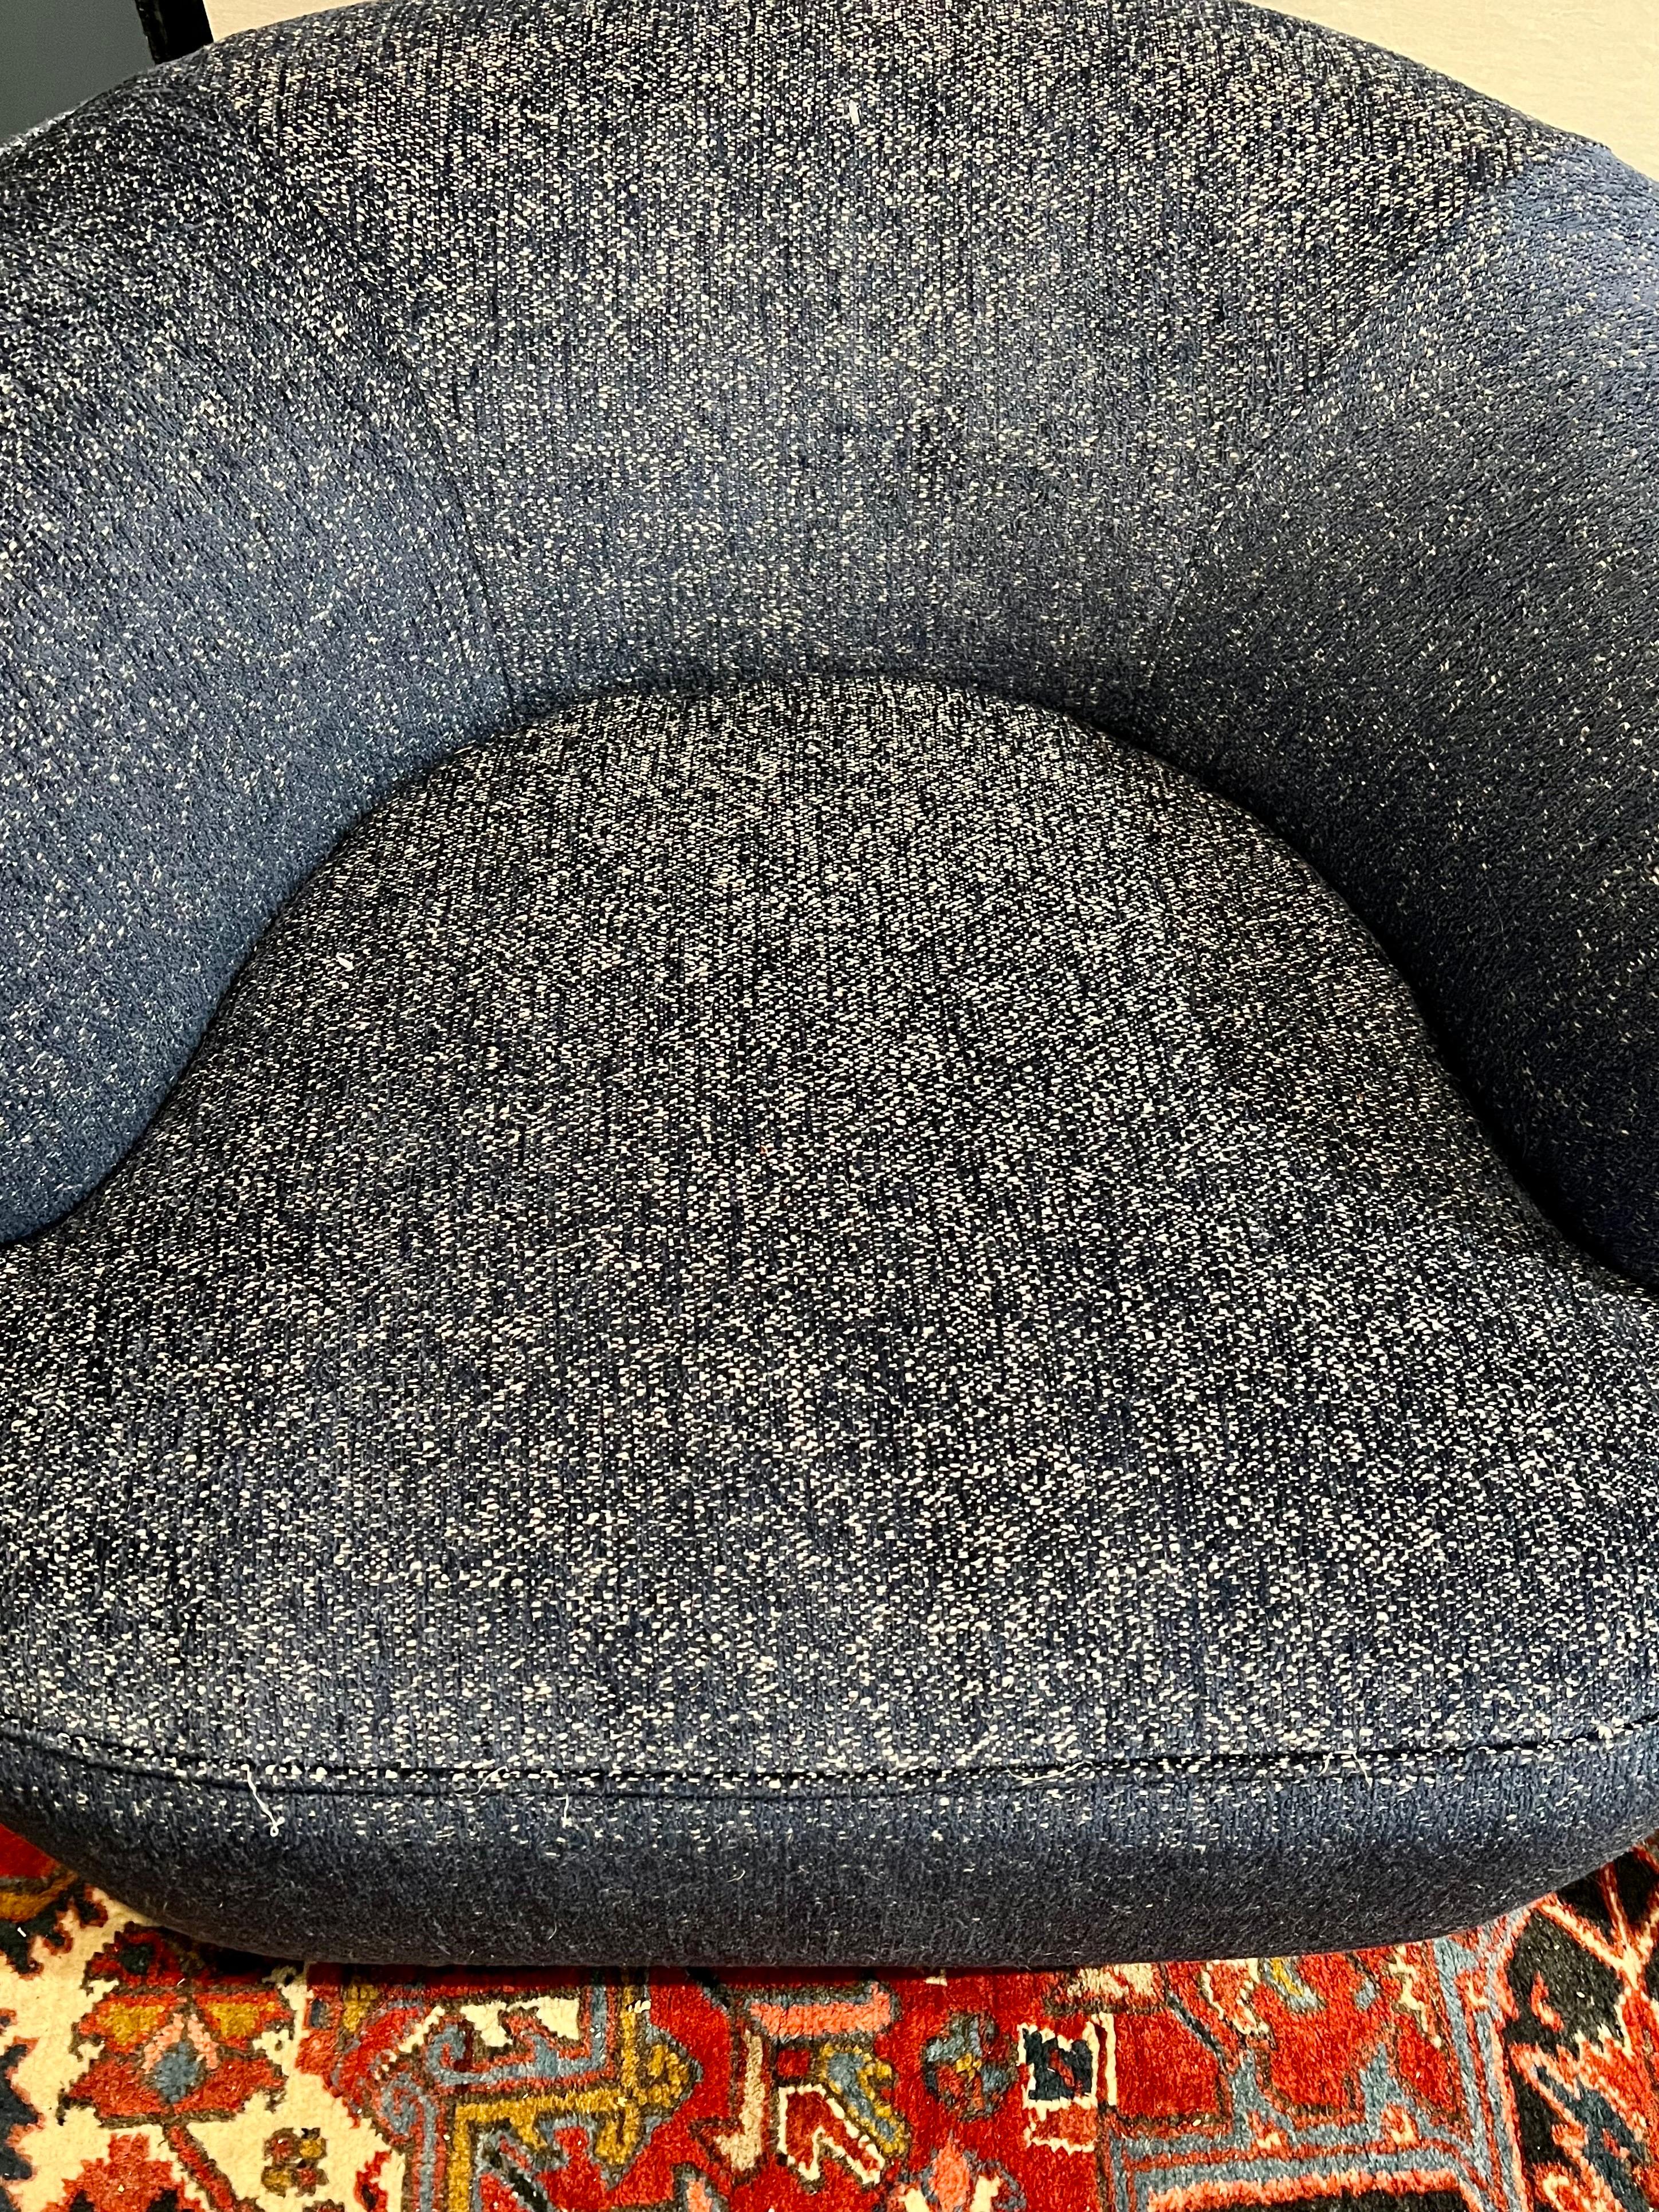 Fabric Mid Century Modern Navy Blue Swivel Chairs New Upholstery 